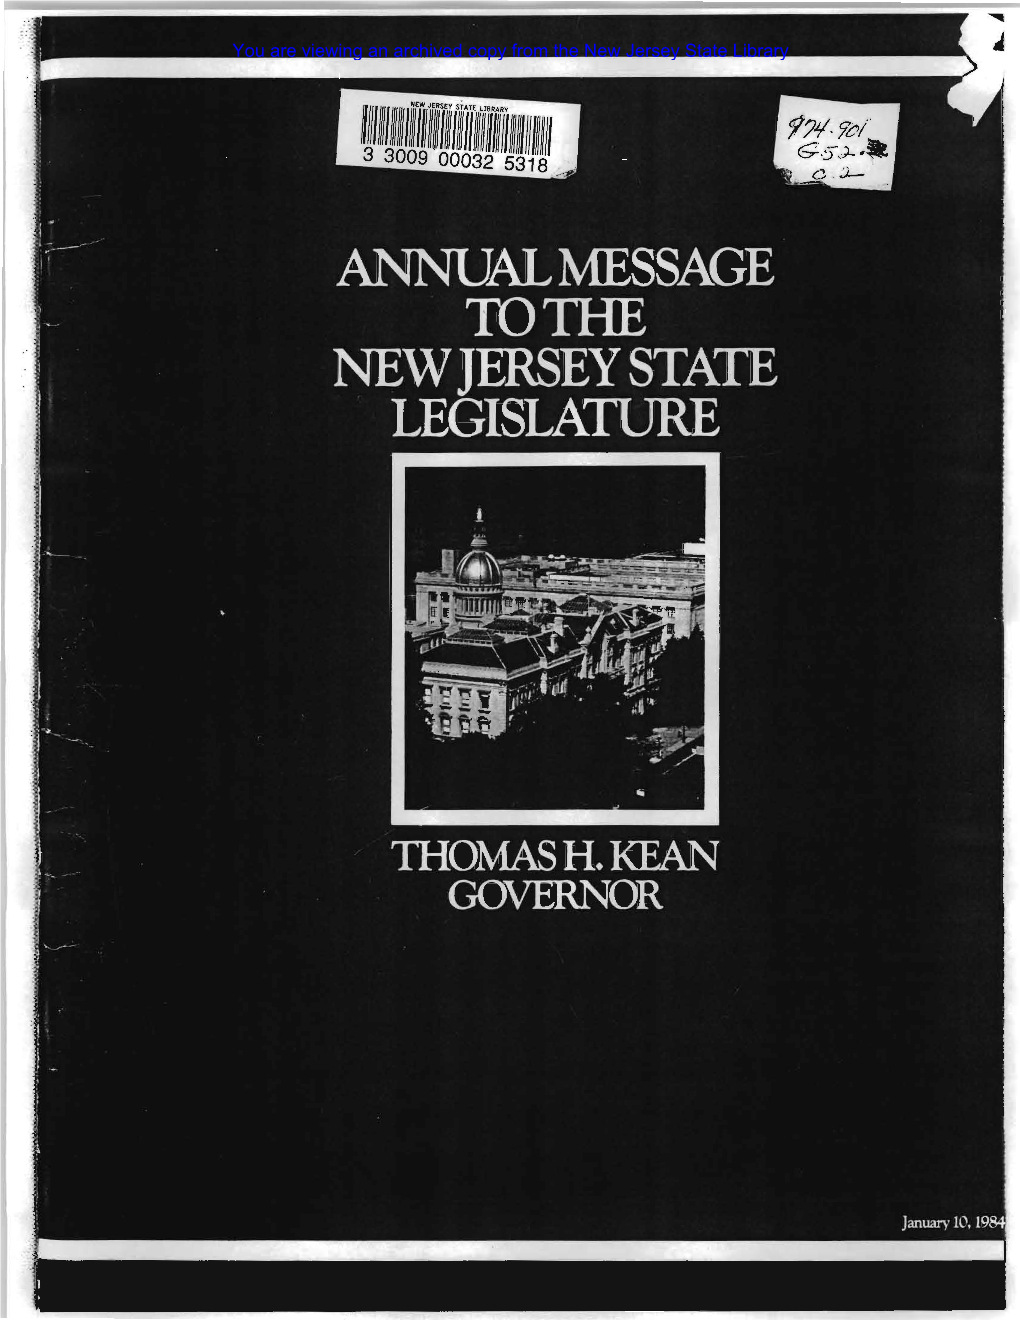 Governor Thomas H. Kean Annual Message to the Legislature 1984